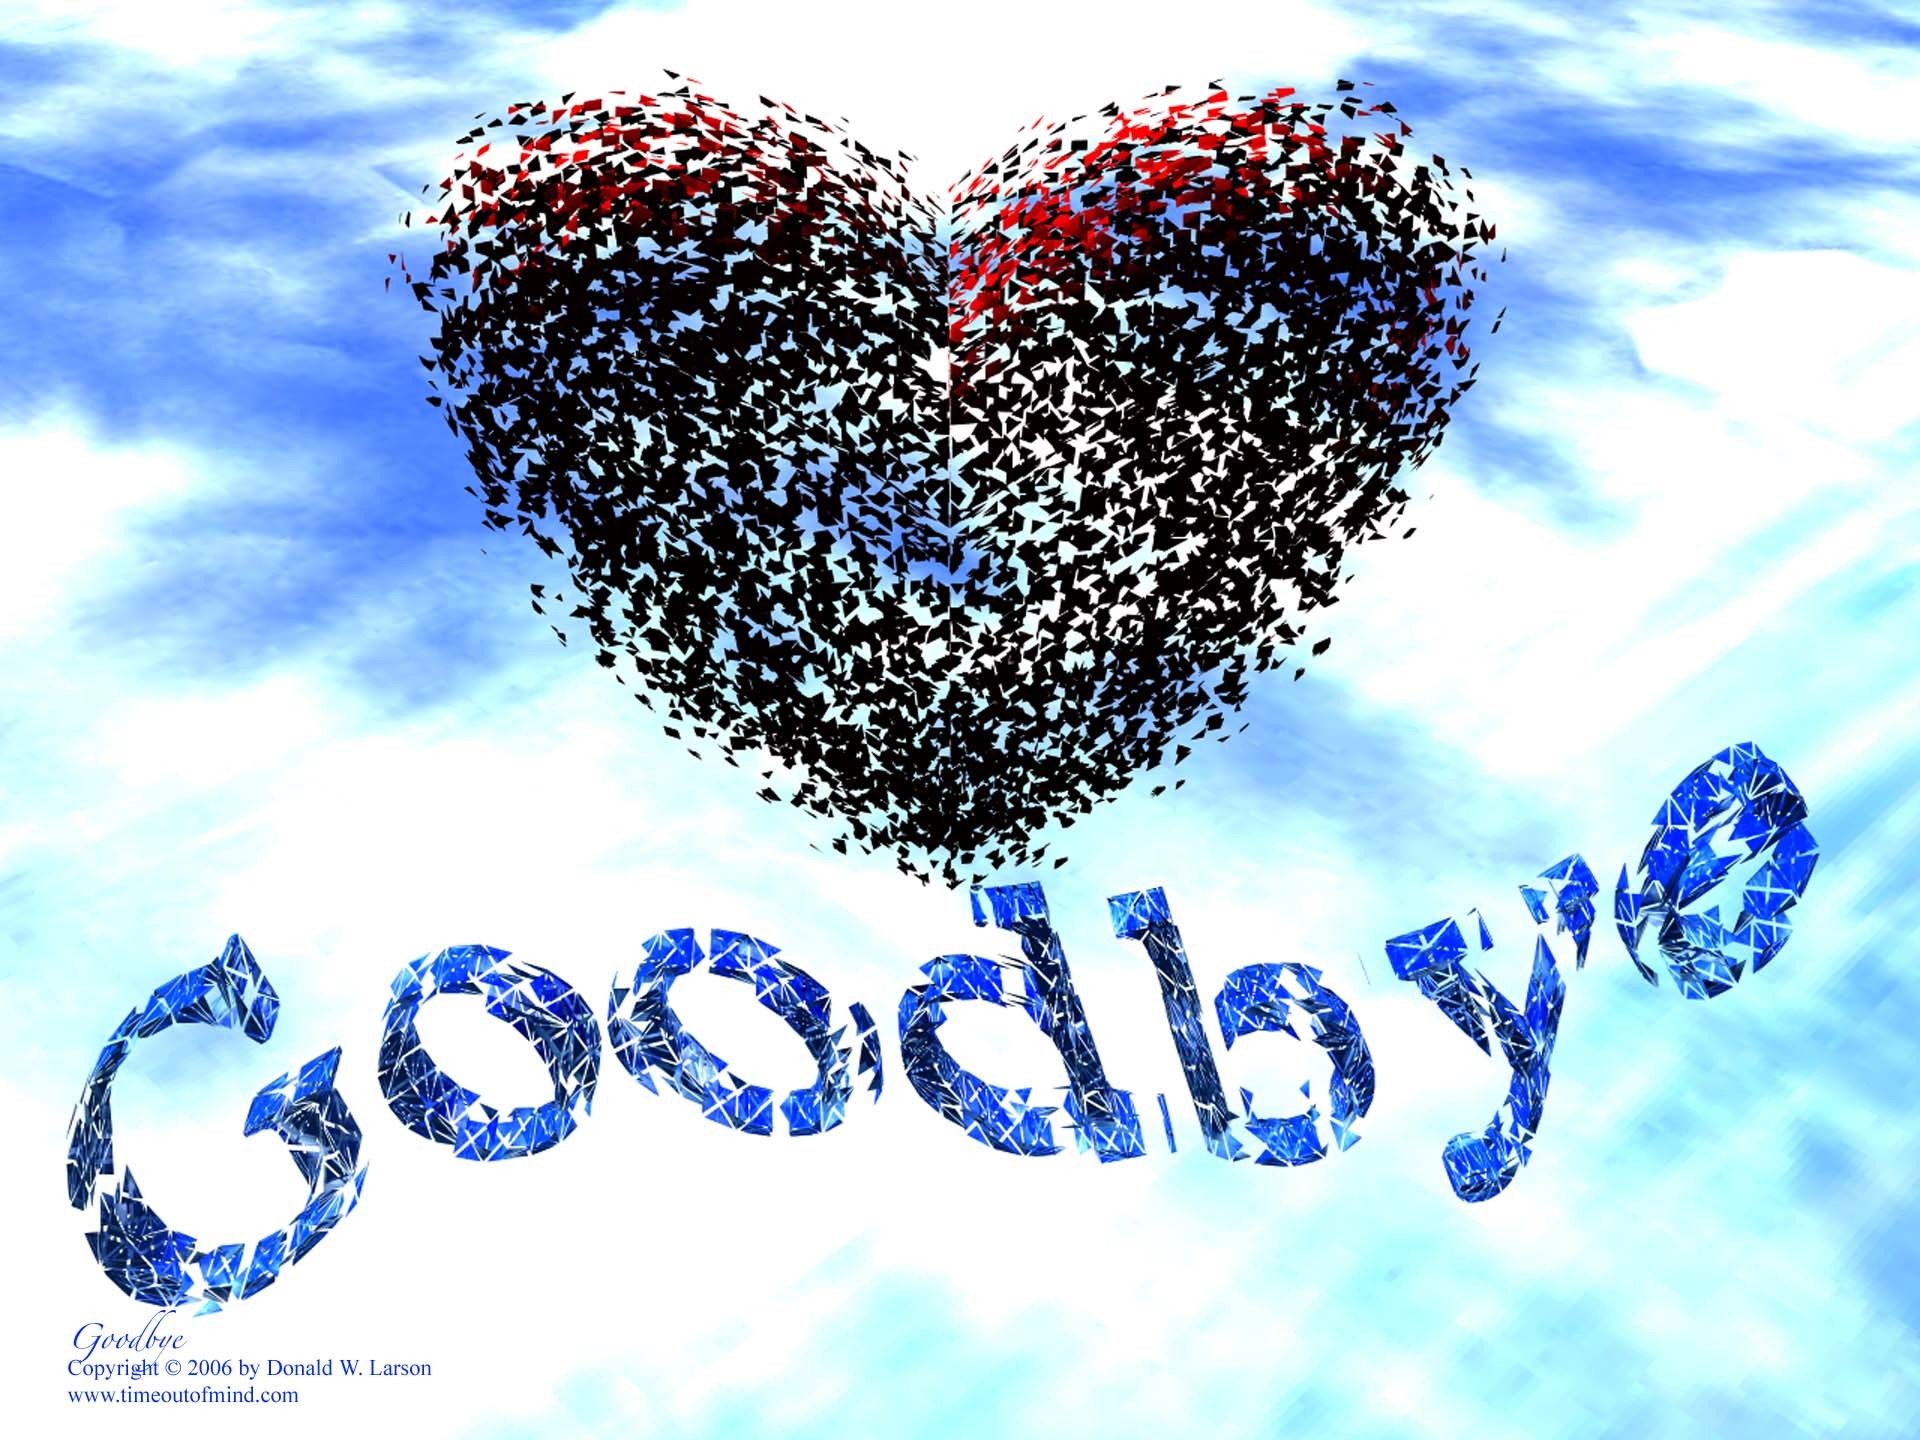 Goodbye 04/30/06, X Â - Good Bye Sms In Hindi - HD Wallpaper 